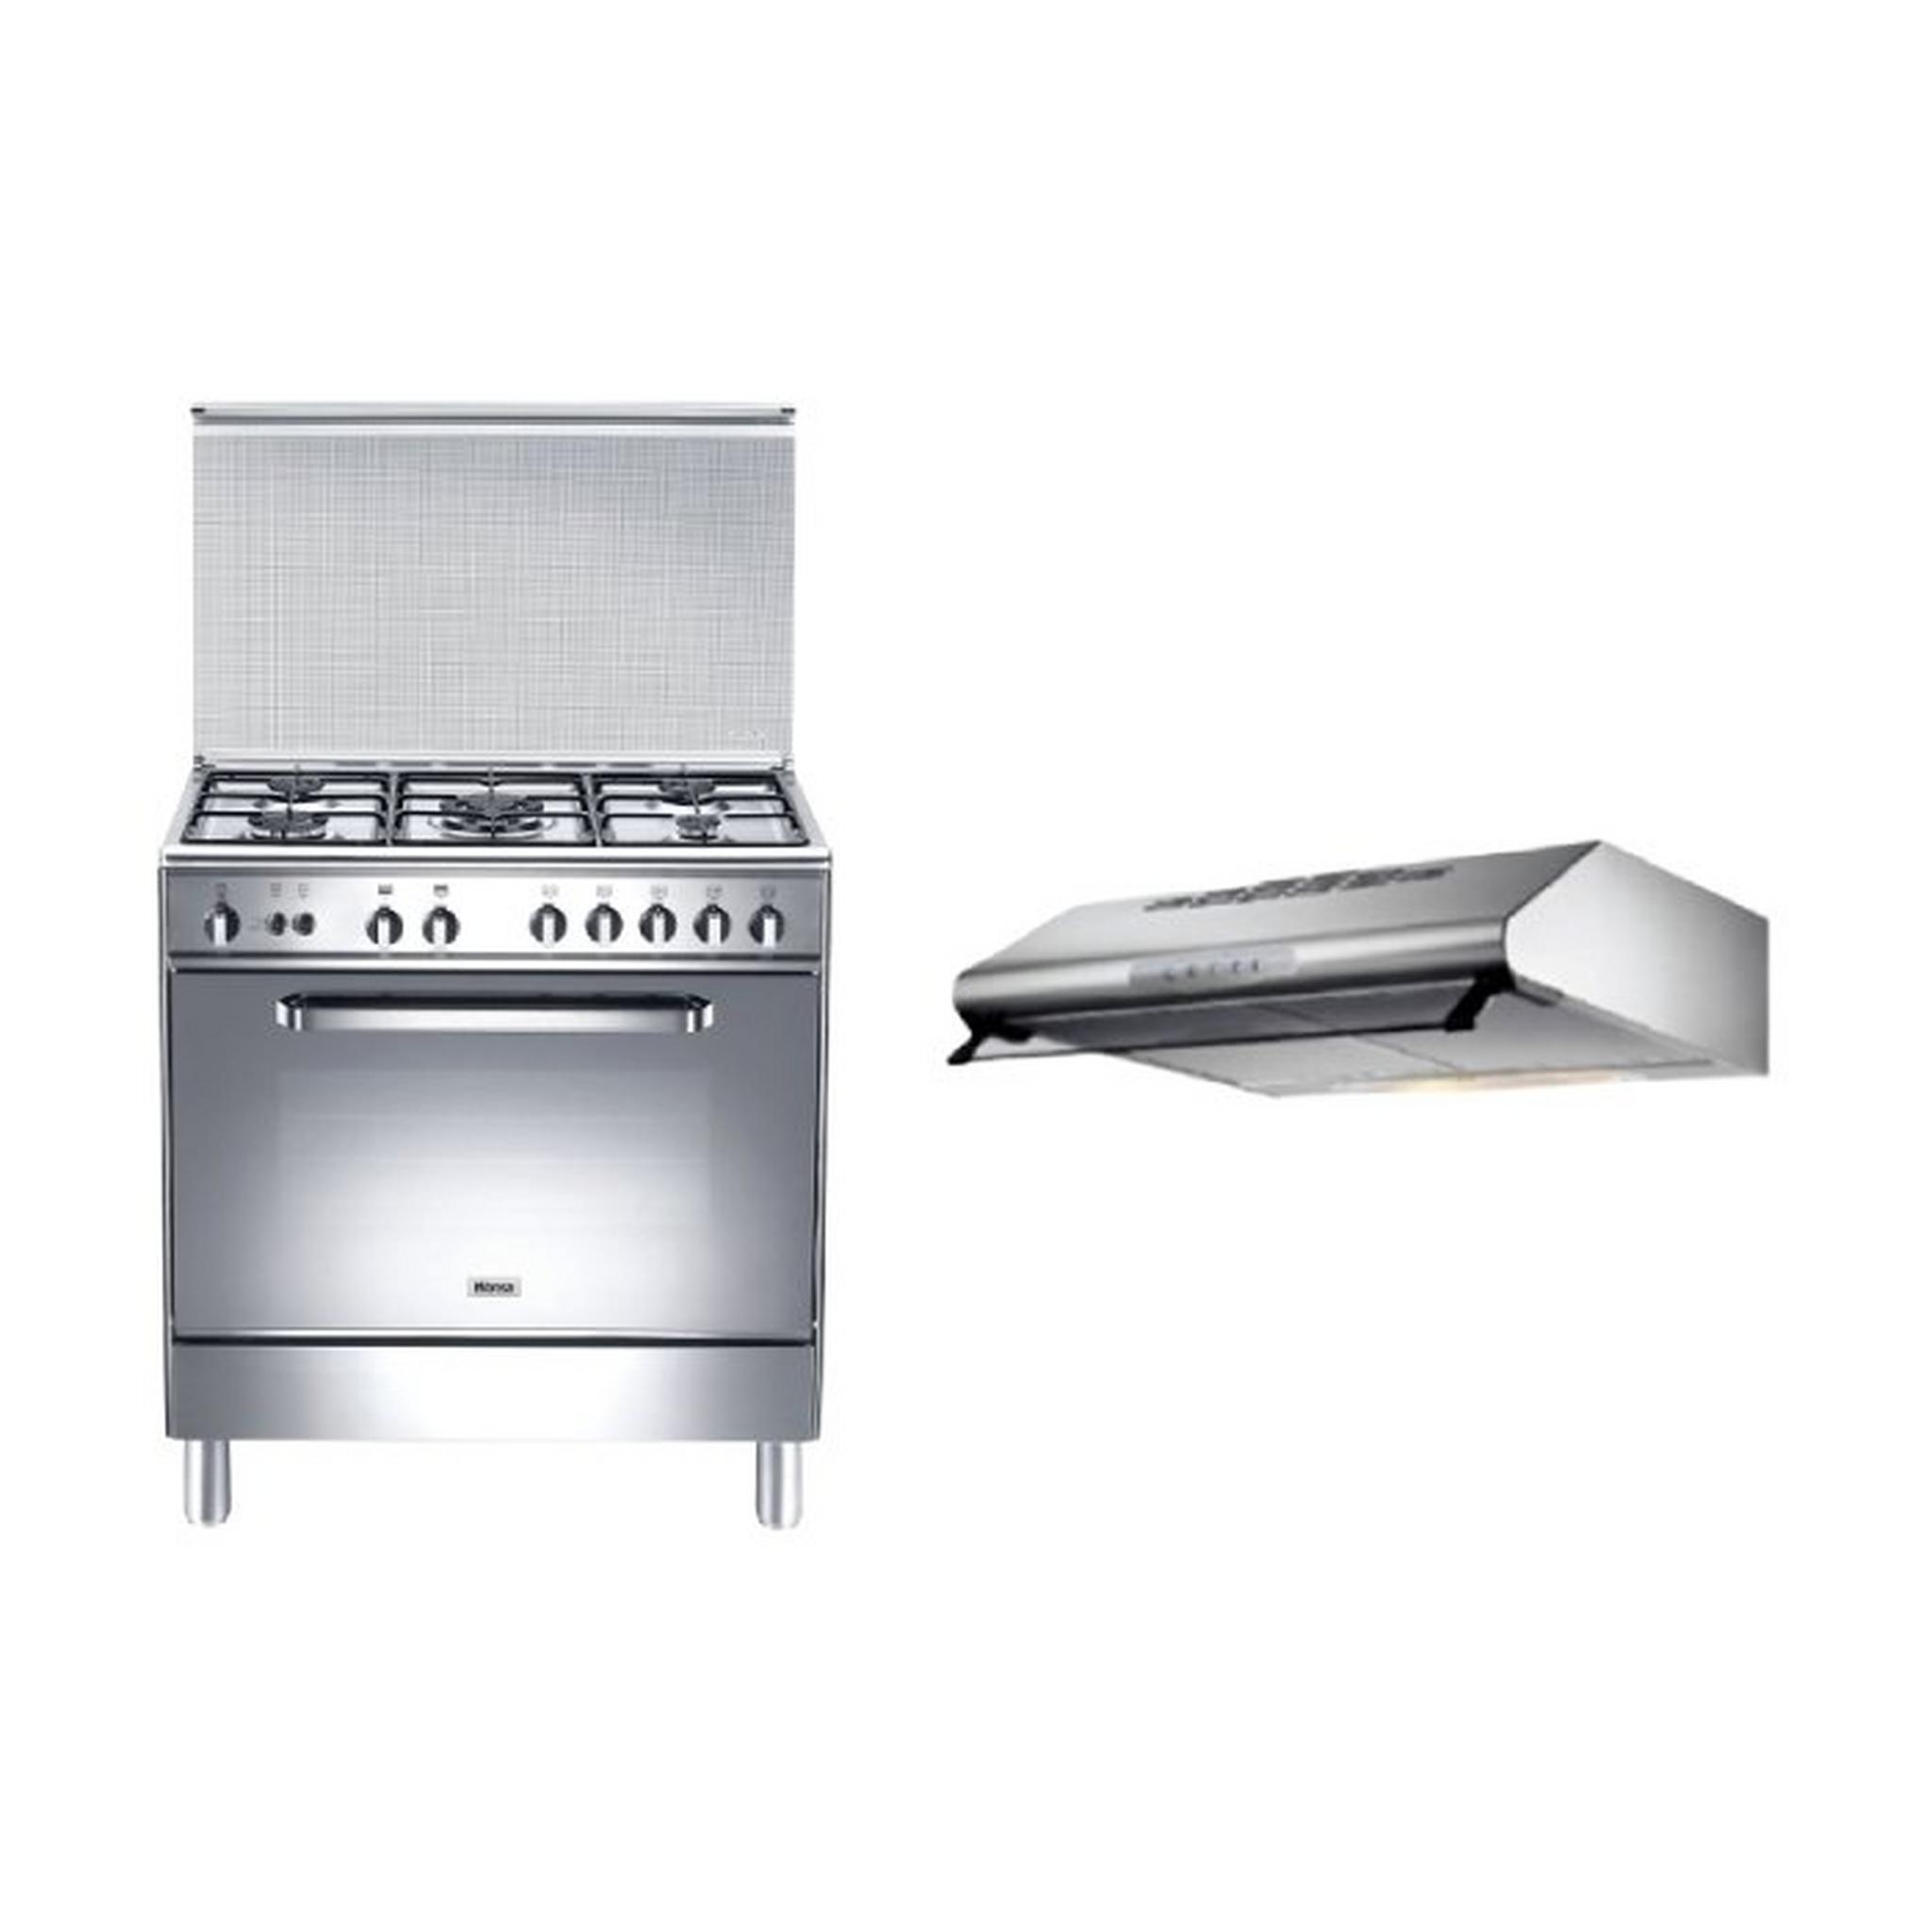 Wansa 80x50 cm 5-Burner Floor Standing Gas Cooker (WC18502114X) + Lagermania 80cm Under-Cabinet Cooker Hood